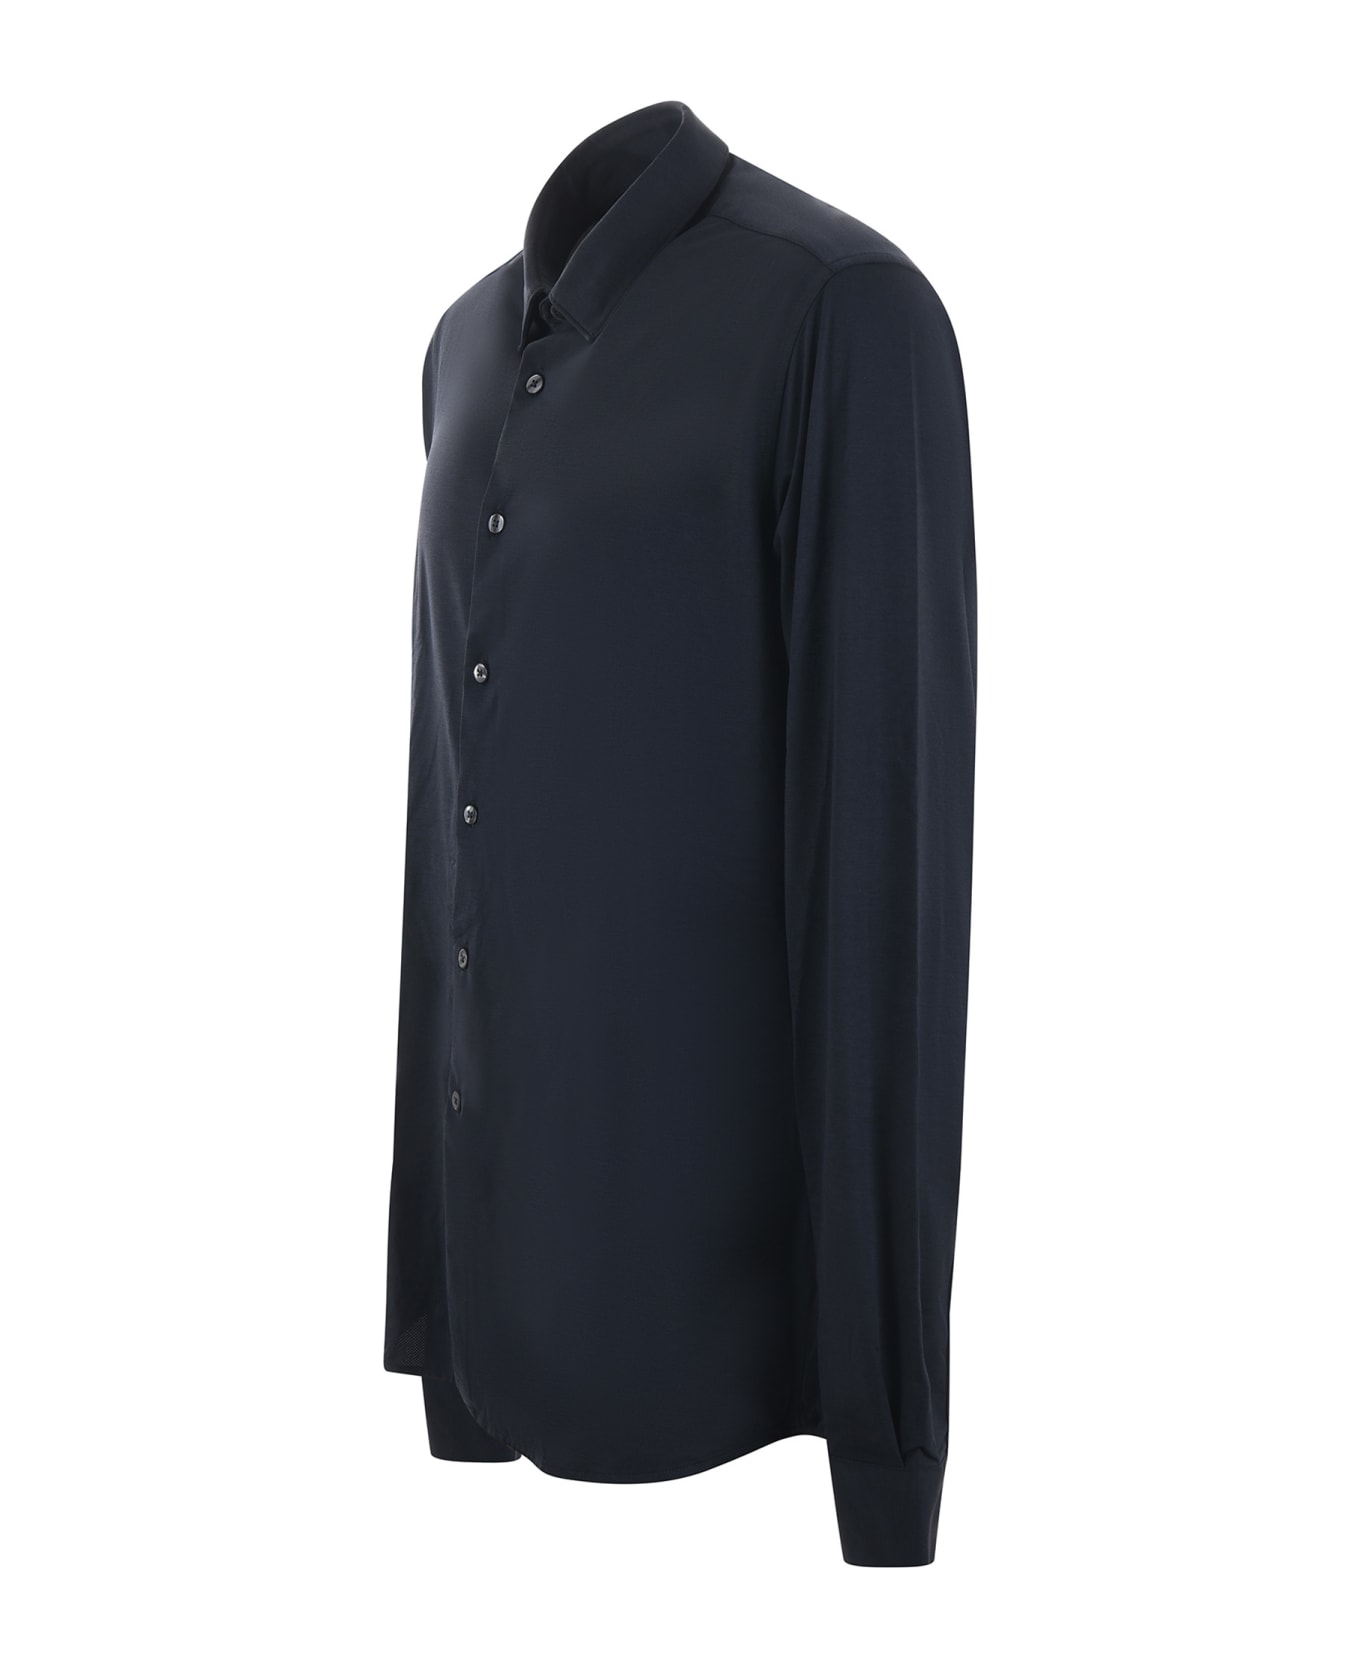 RRD - Roberto Ricci Design Rrd Shirt - Blu scuro シャツ